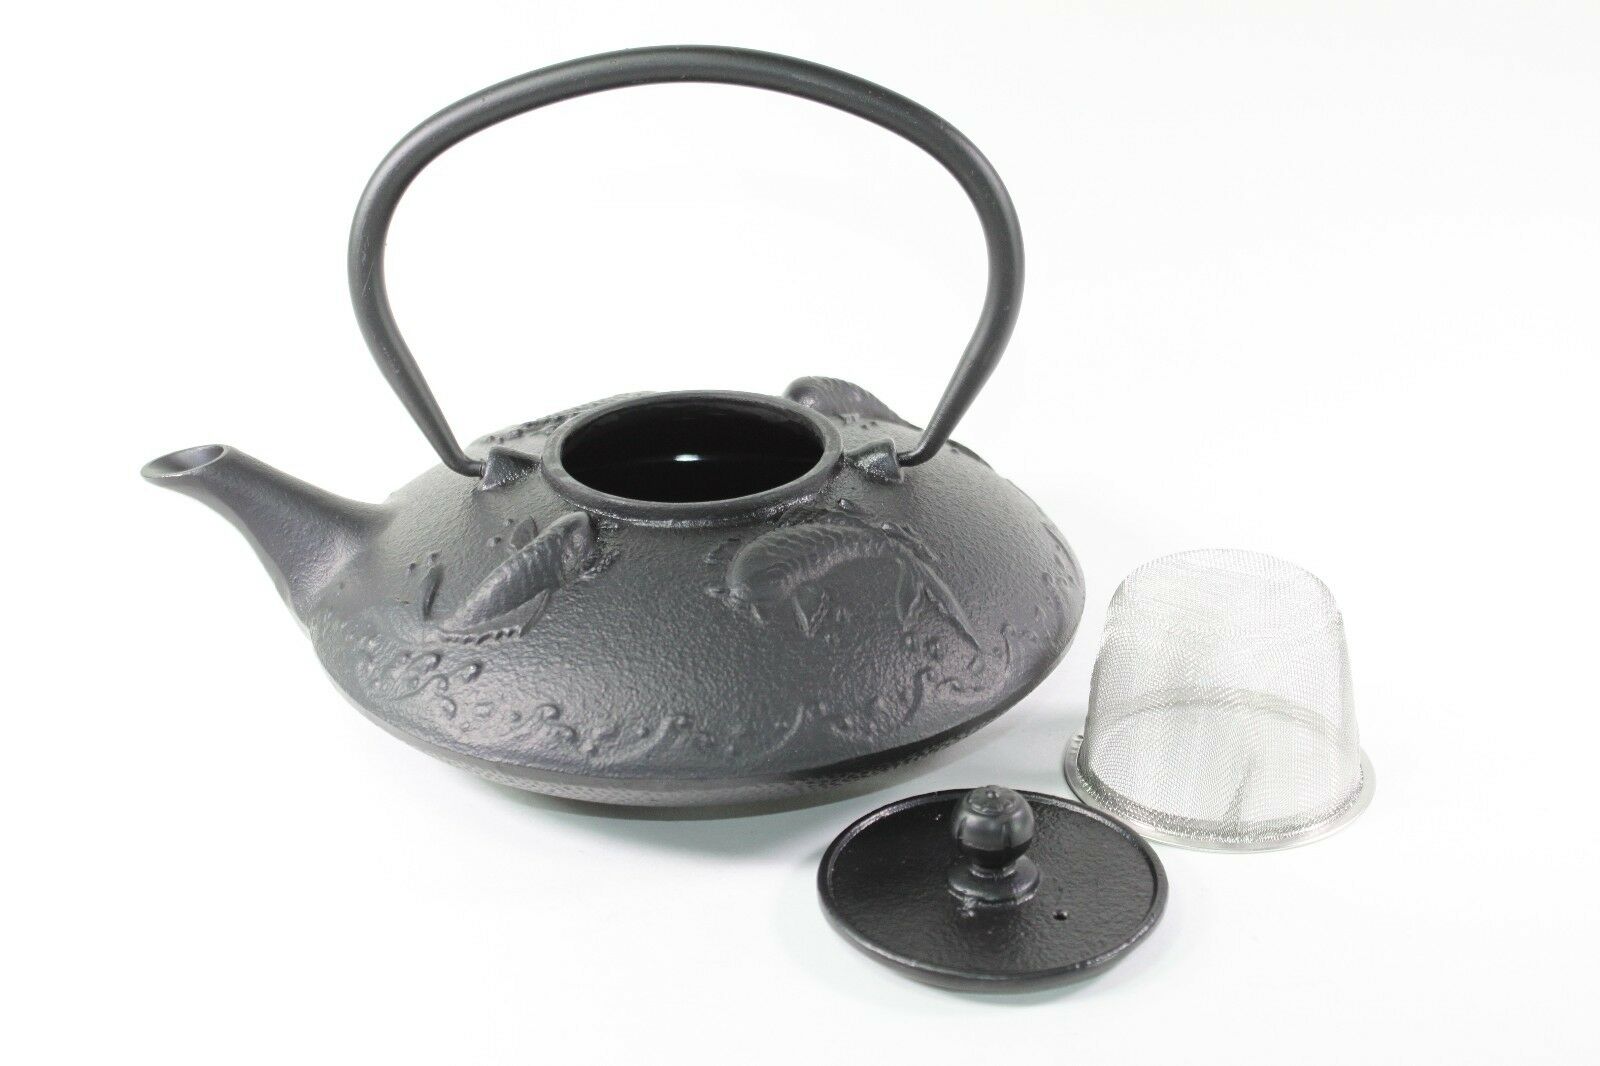 24 fl oz Black Fancy Carp Fish (Koi) Japanese Cast Iron Teapot + Infuser Filter F15591 - image 3 of 3